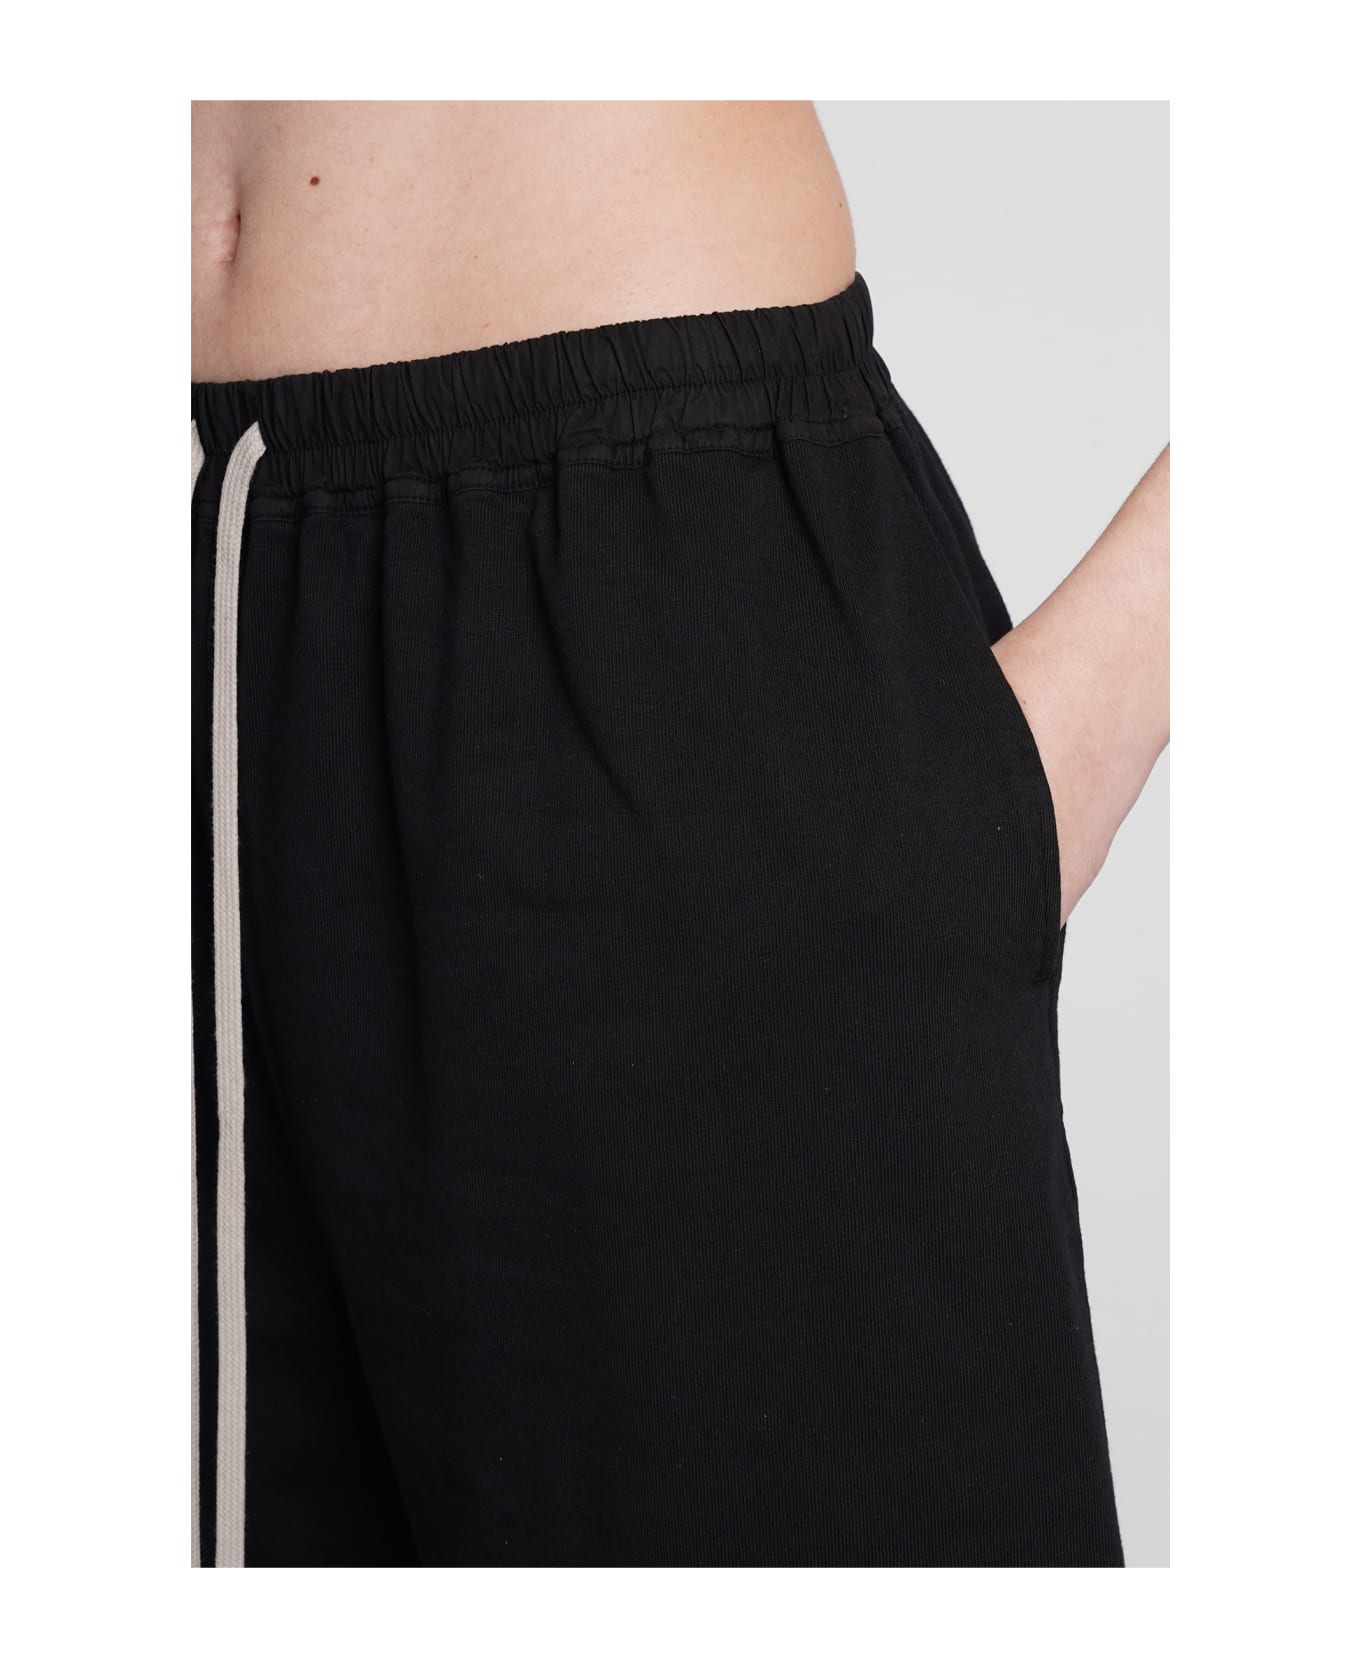 DRKSHDW Boxers Shorts - black ショートパンツ